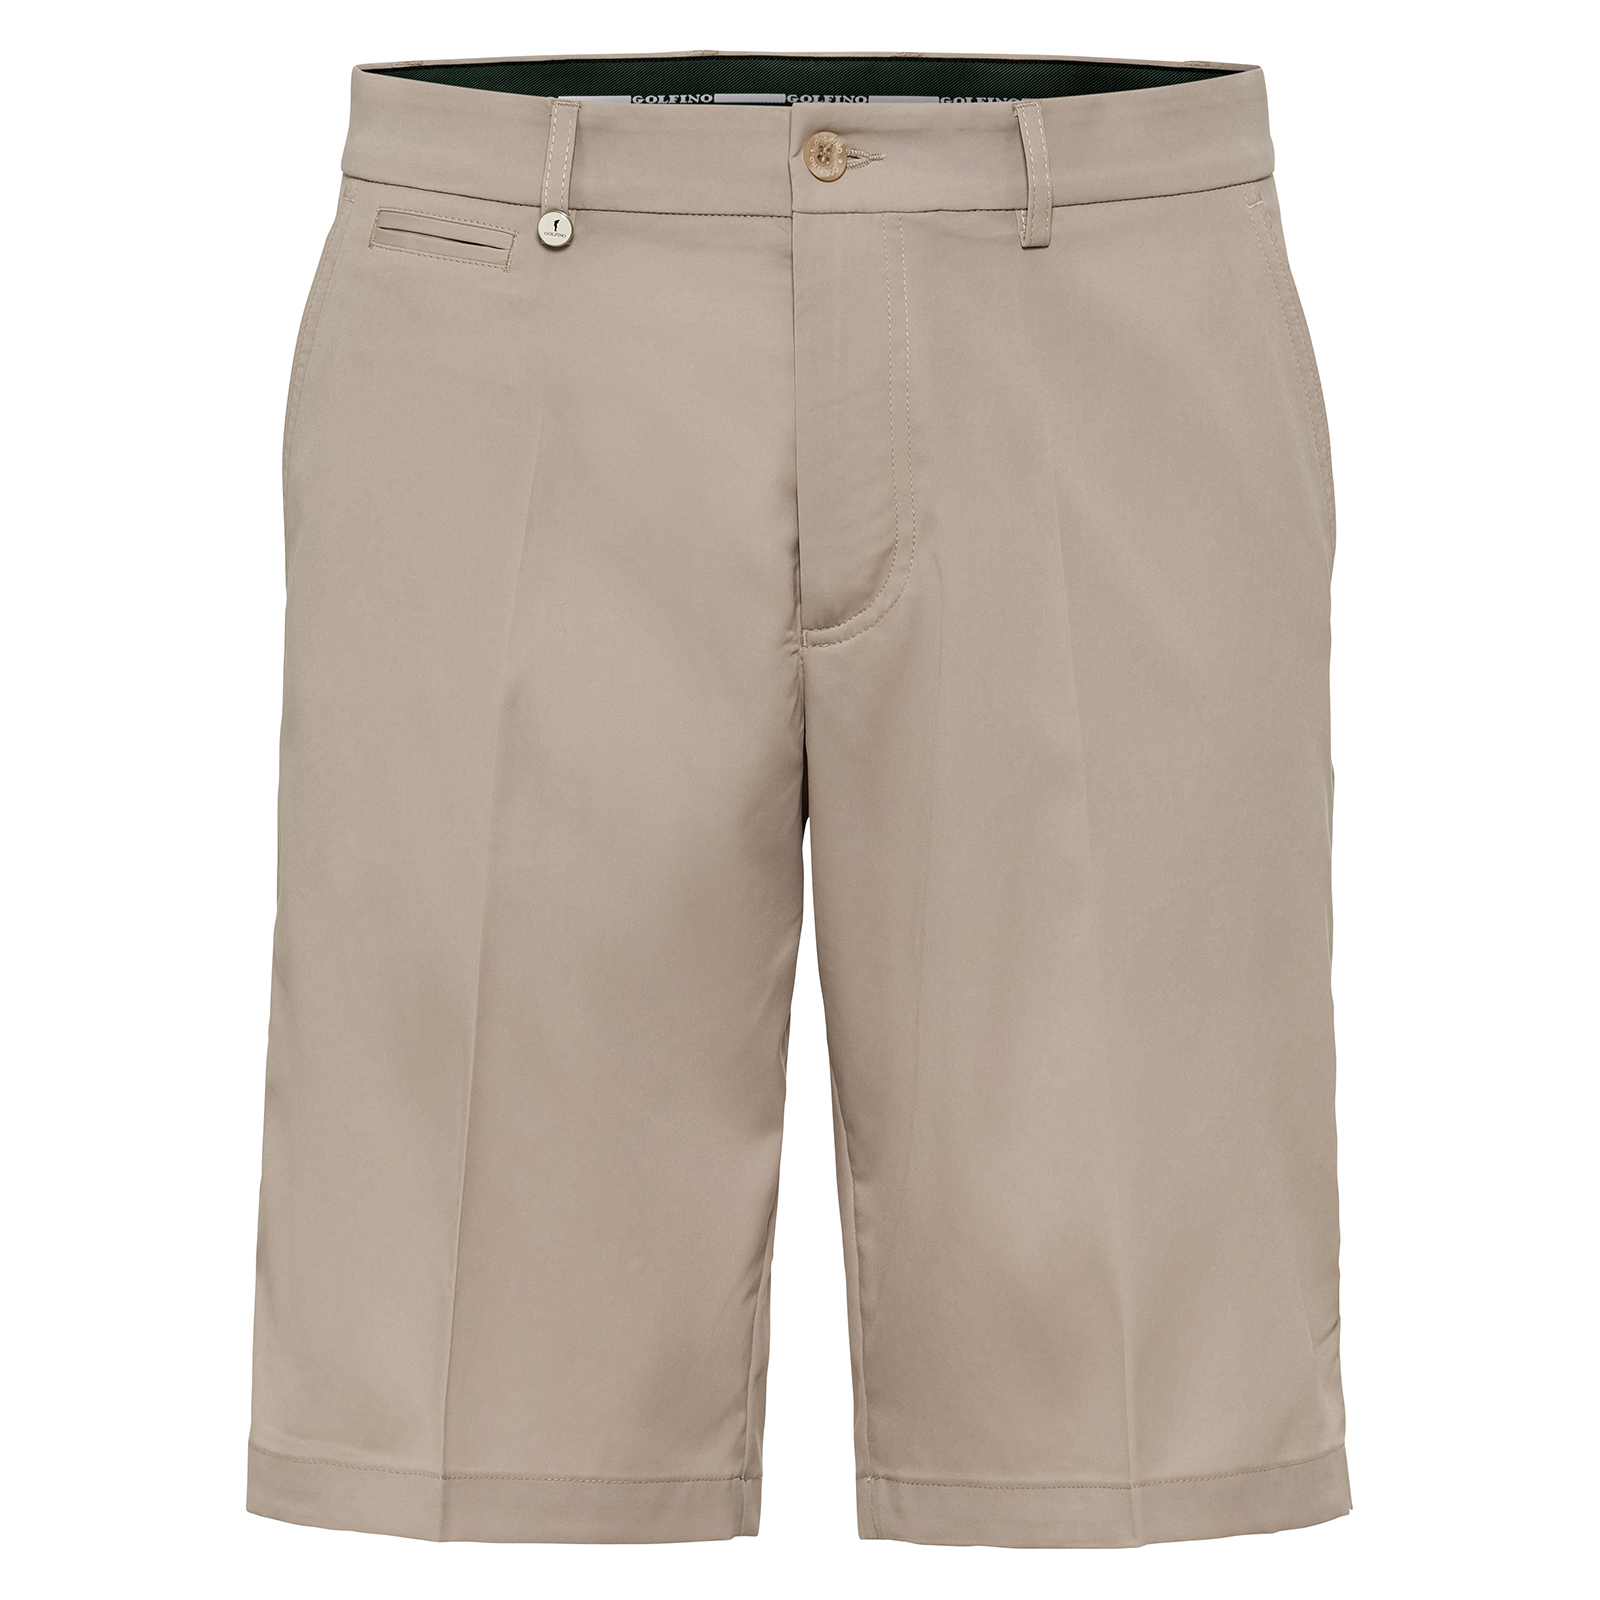 Men's durable, quick dry golf Bermuda shorts 